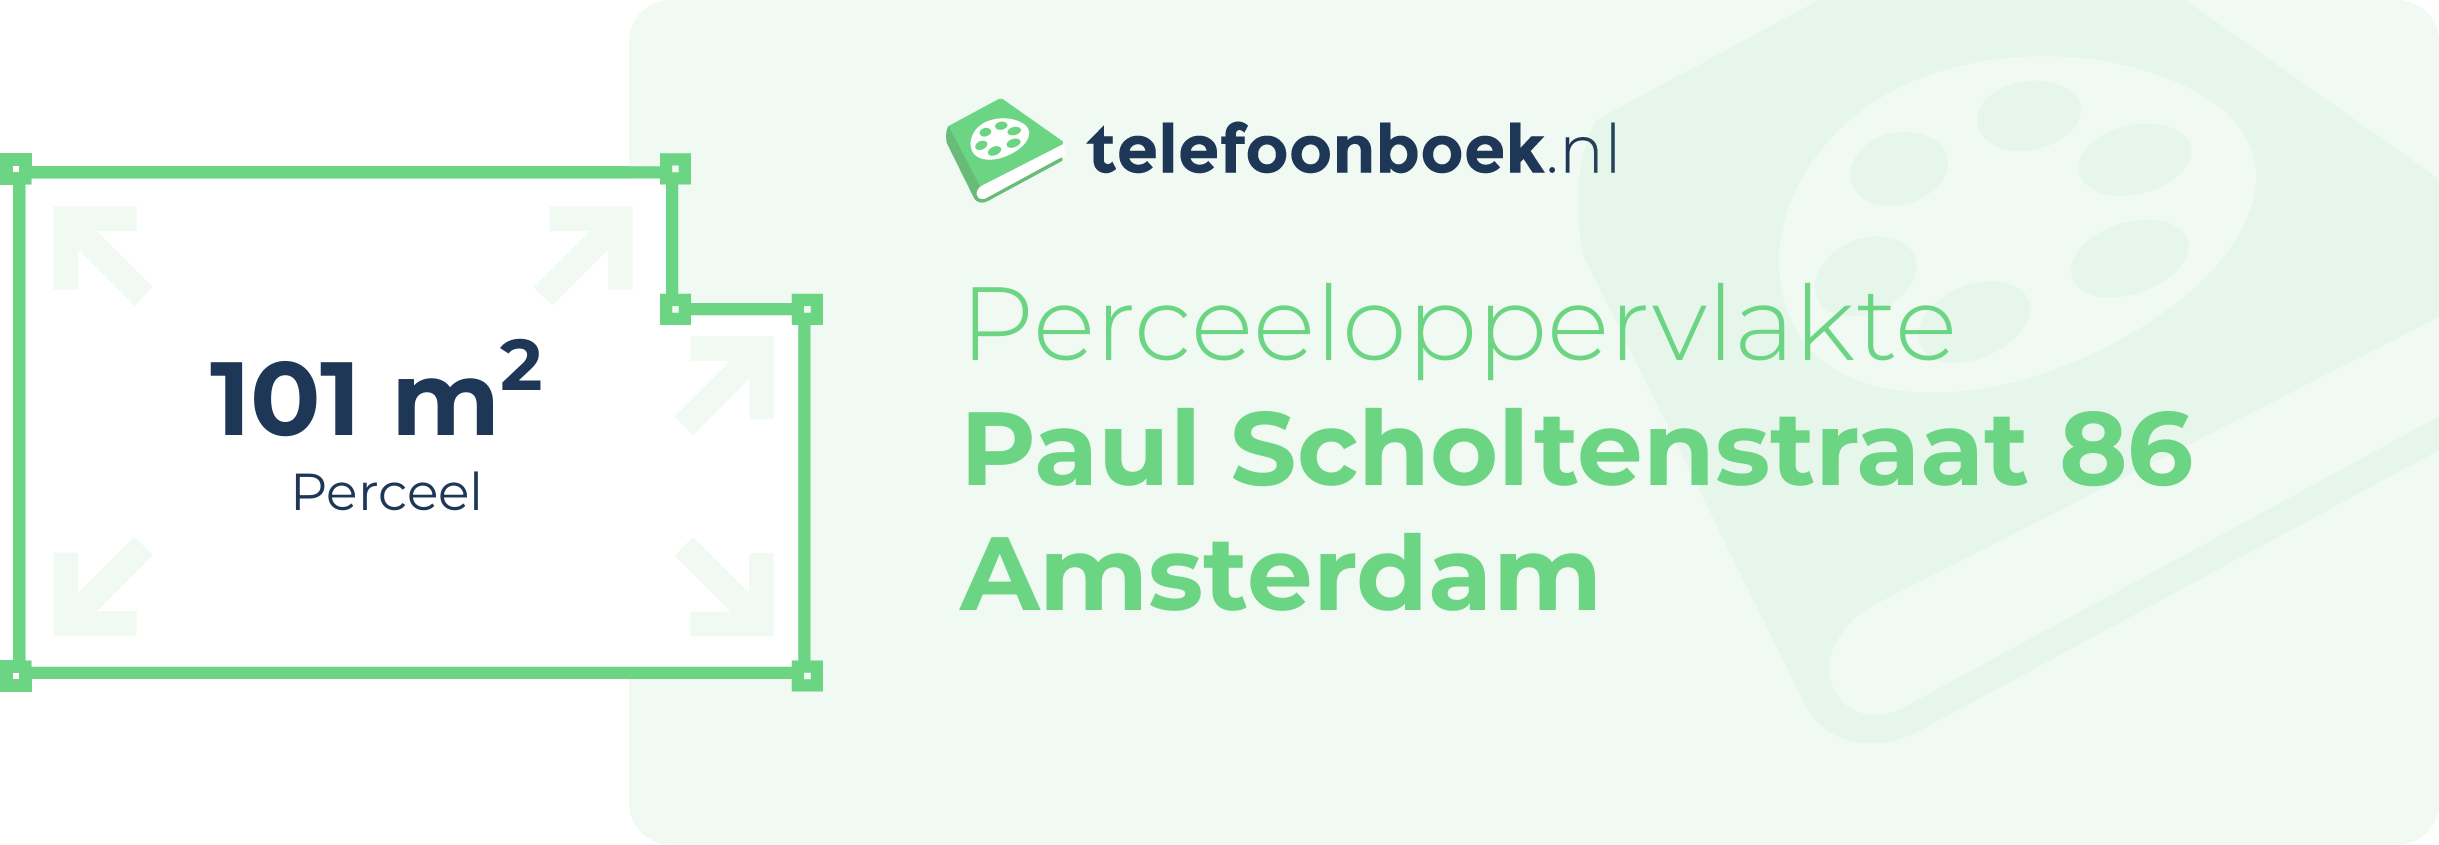 Perceeloppervlakte Paul Scholtenstraat 86 Amsterdam